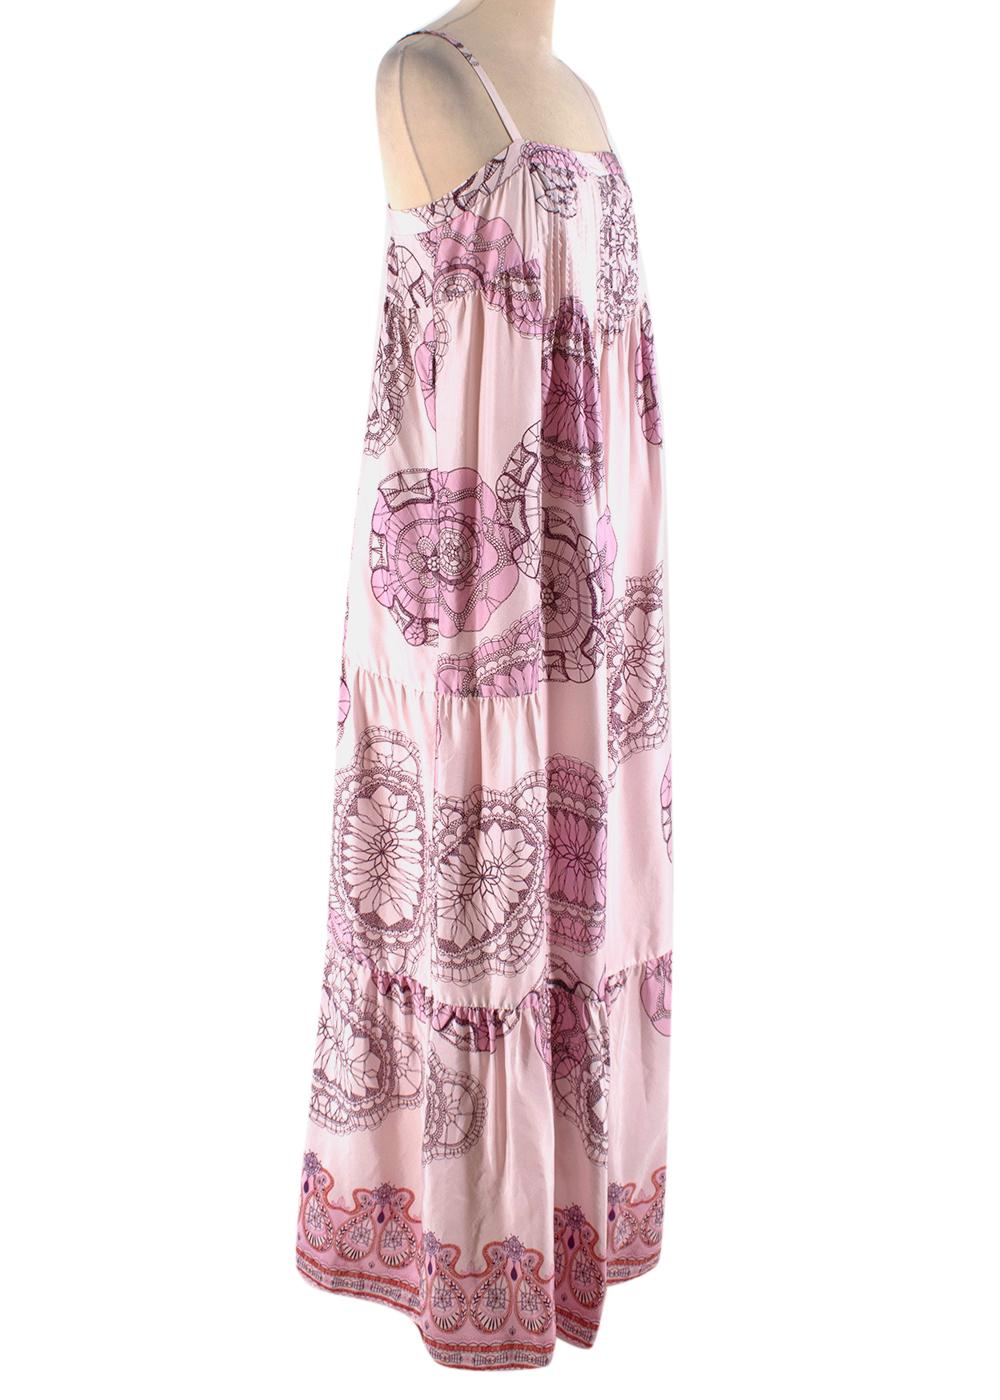 Tibi Pink Floral Patterned Maxi Dress 4 For Sale 1